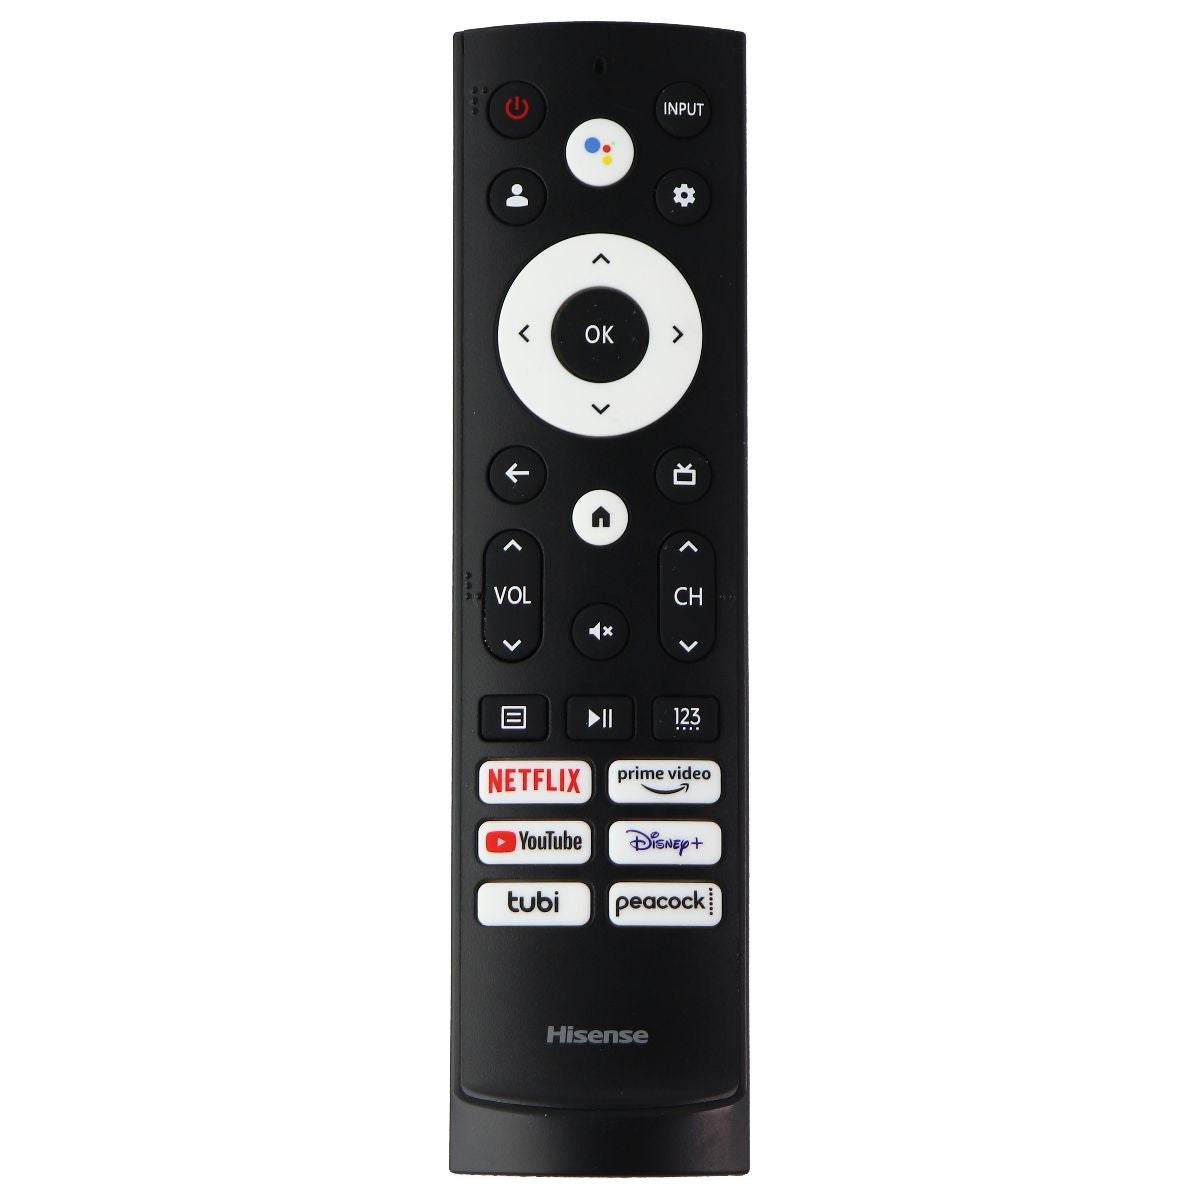 Hisense OEM Remote Control (ERF3M90H) for Select Hisense TVs - Black TV, Video & Audio Accessories - Remote Controls Hisense    - Simple Cell Bulk Wholesale Pricing - USA Seller